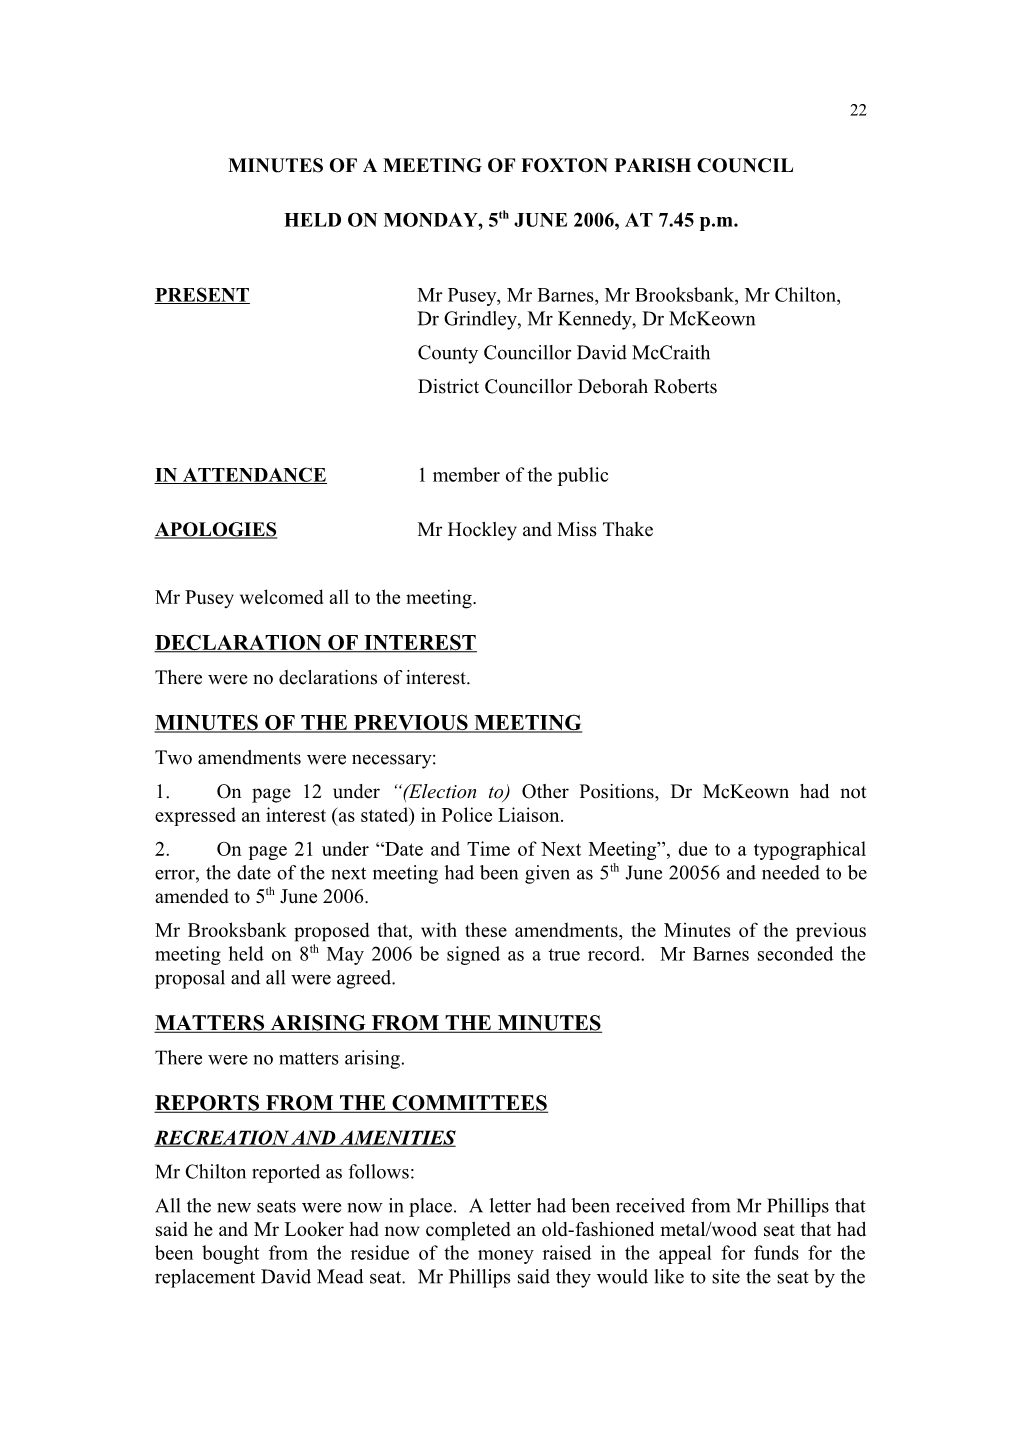 Minutes of a Meeting of Foxton Parish Council